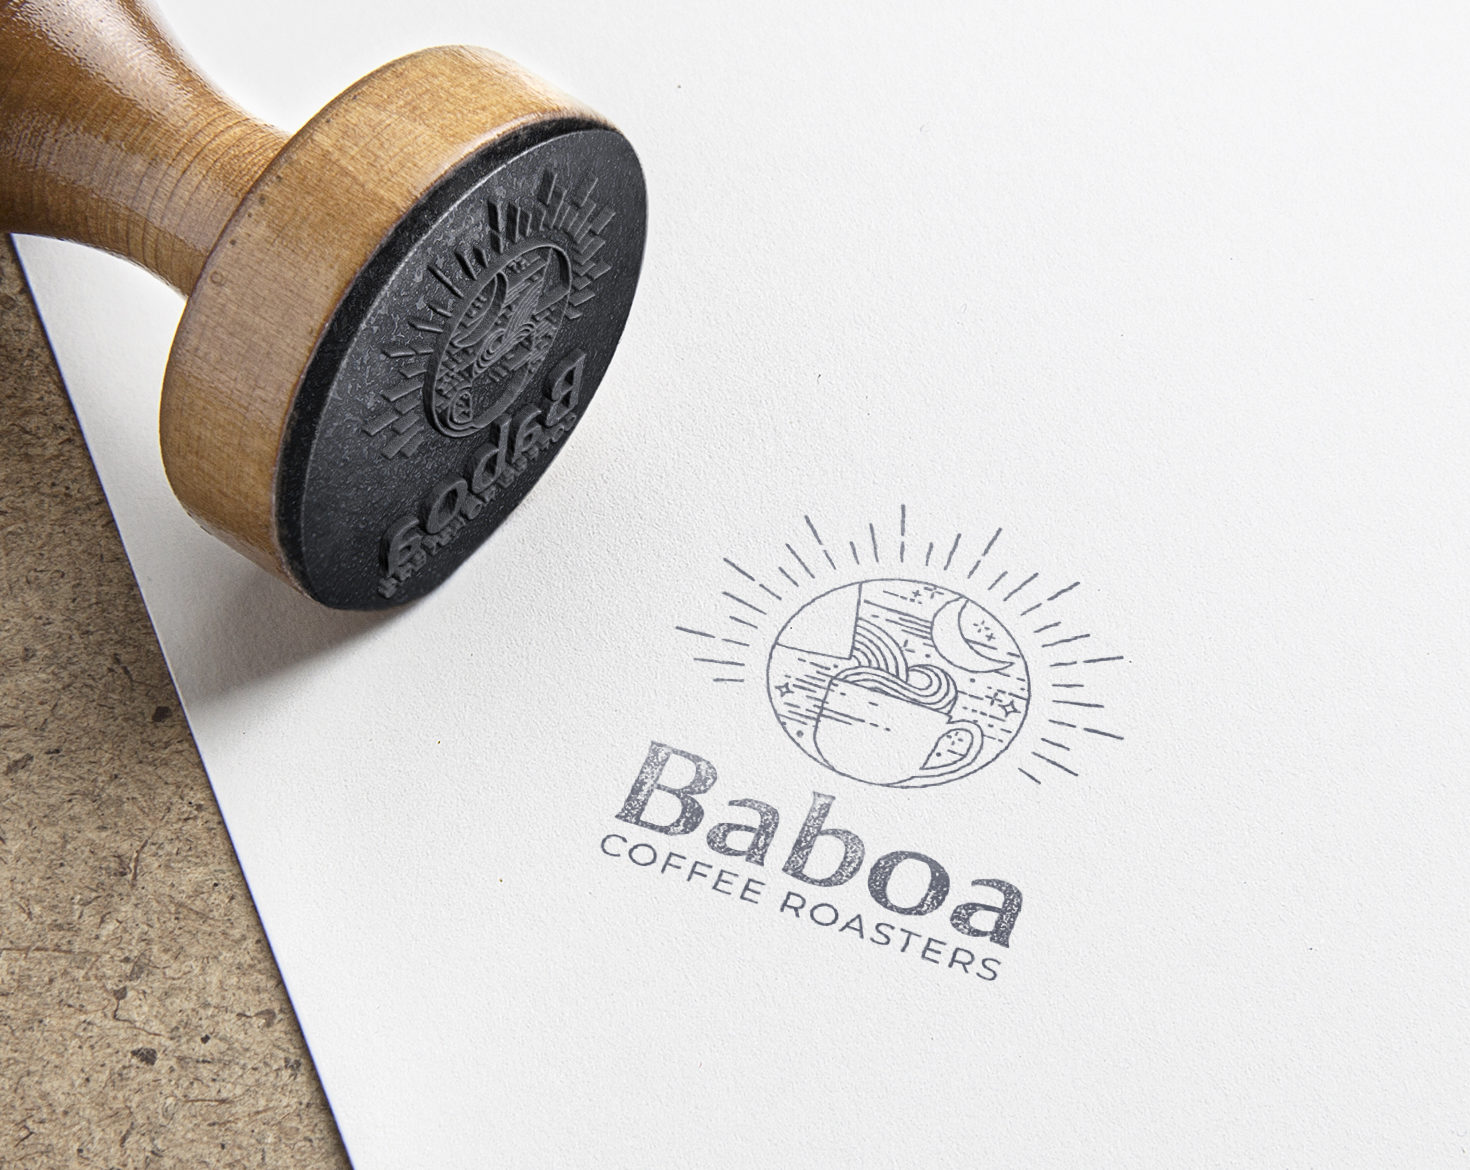 White Baboa Coffee Roasters logo stamped